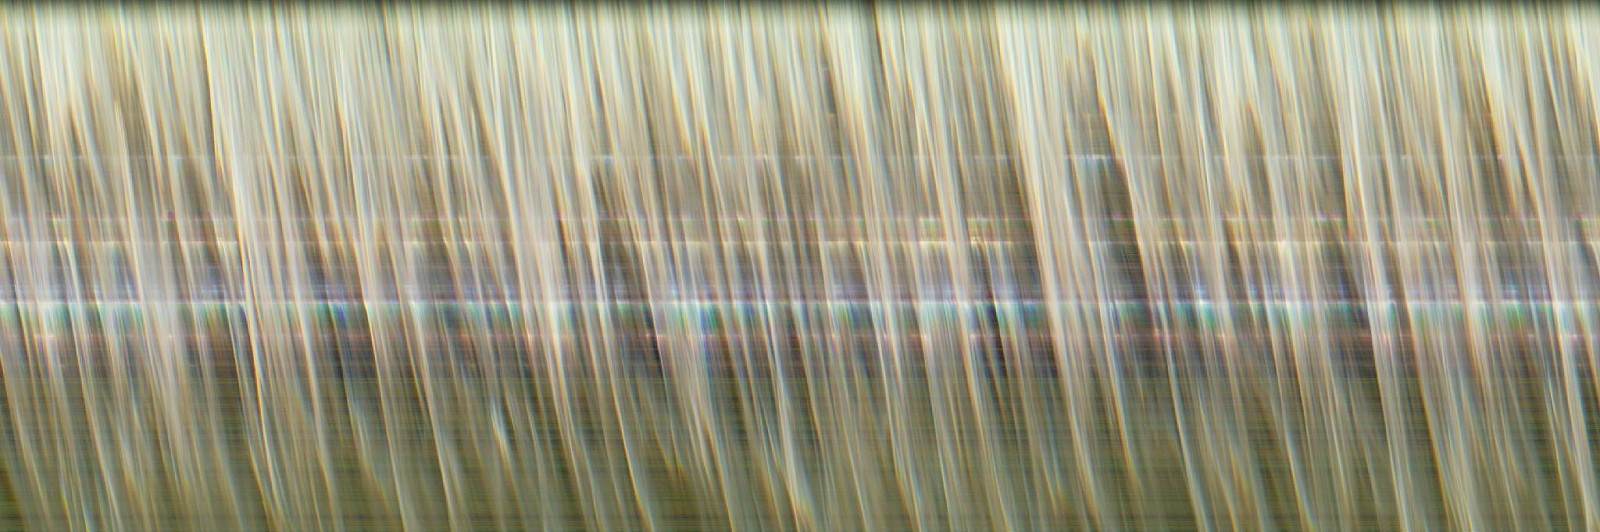 Jay Mark Johnson, AKAKA KASKATA 18, 2010 Akaka Falls HI
archival pigment on paper, mounted on aluminum, 40 x 120 in. (101.6 x 304.8 cm)